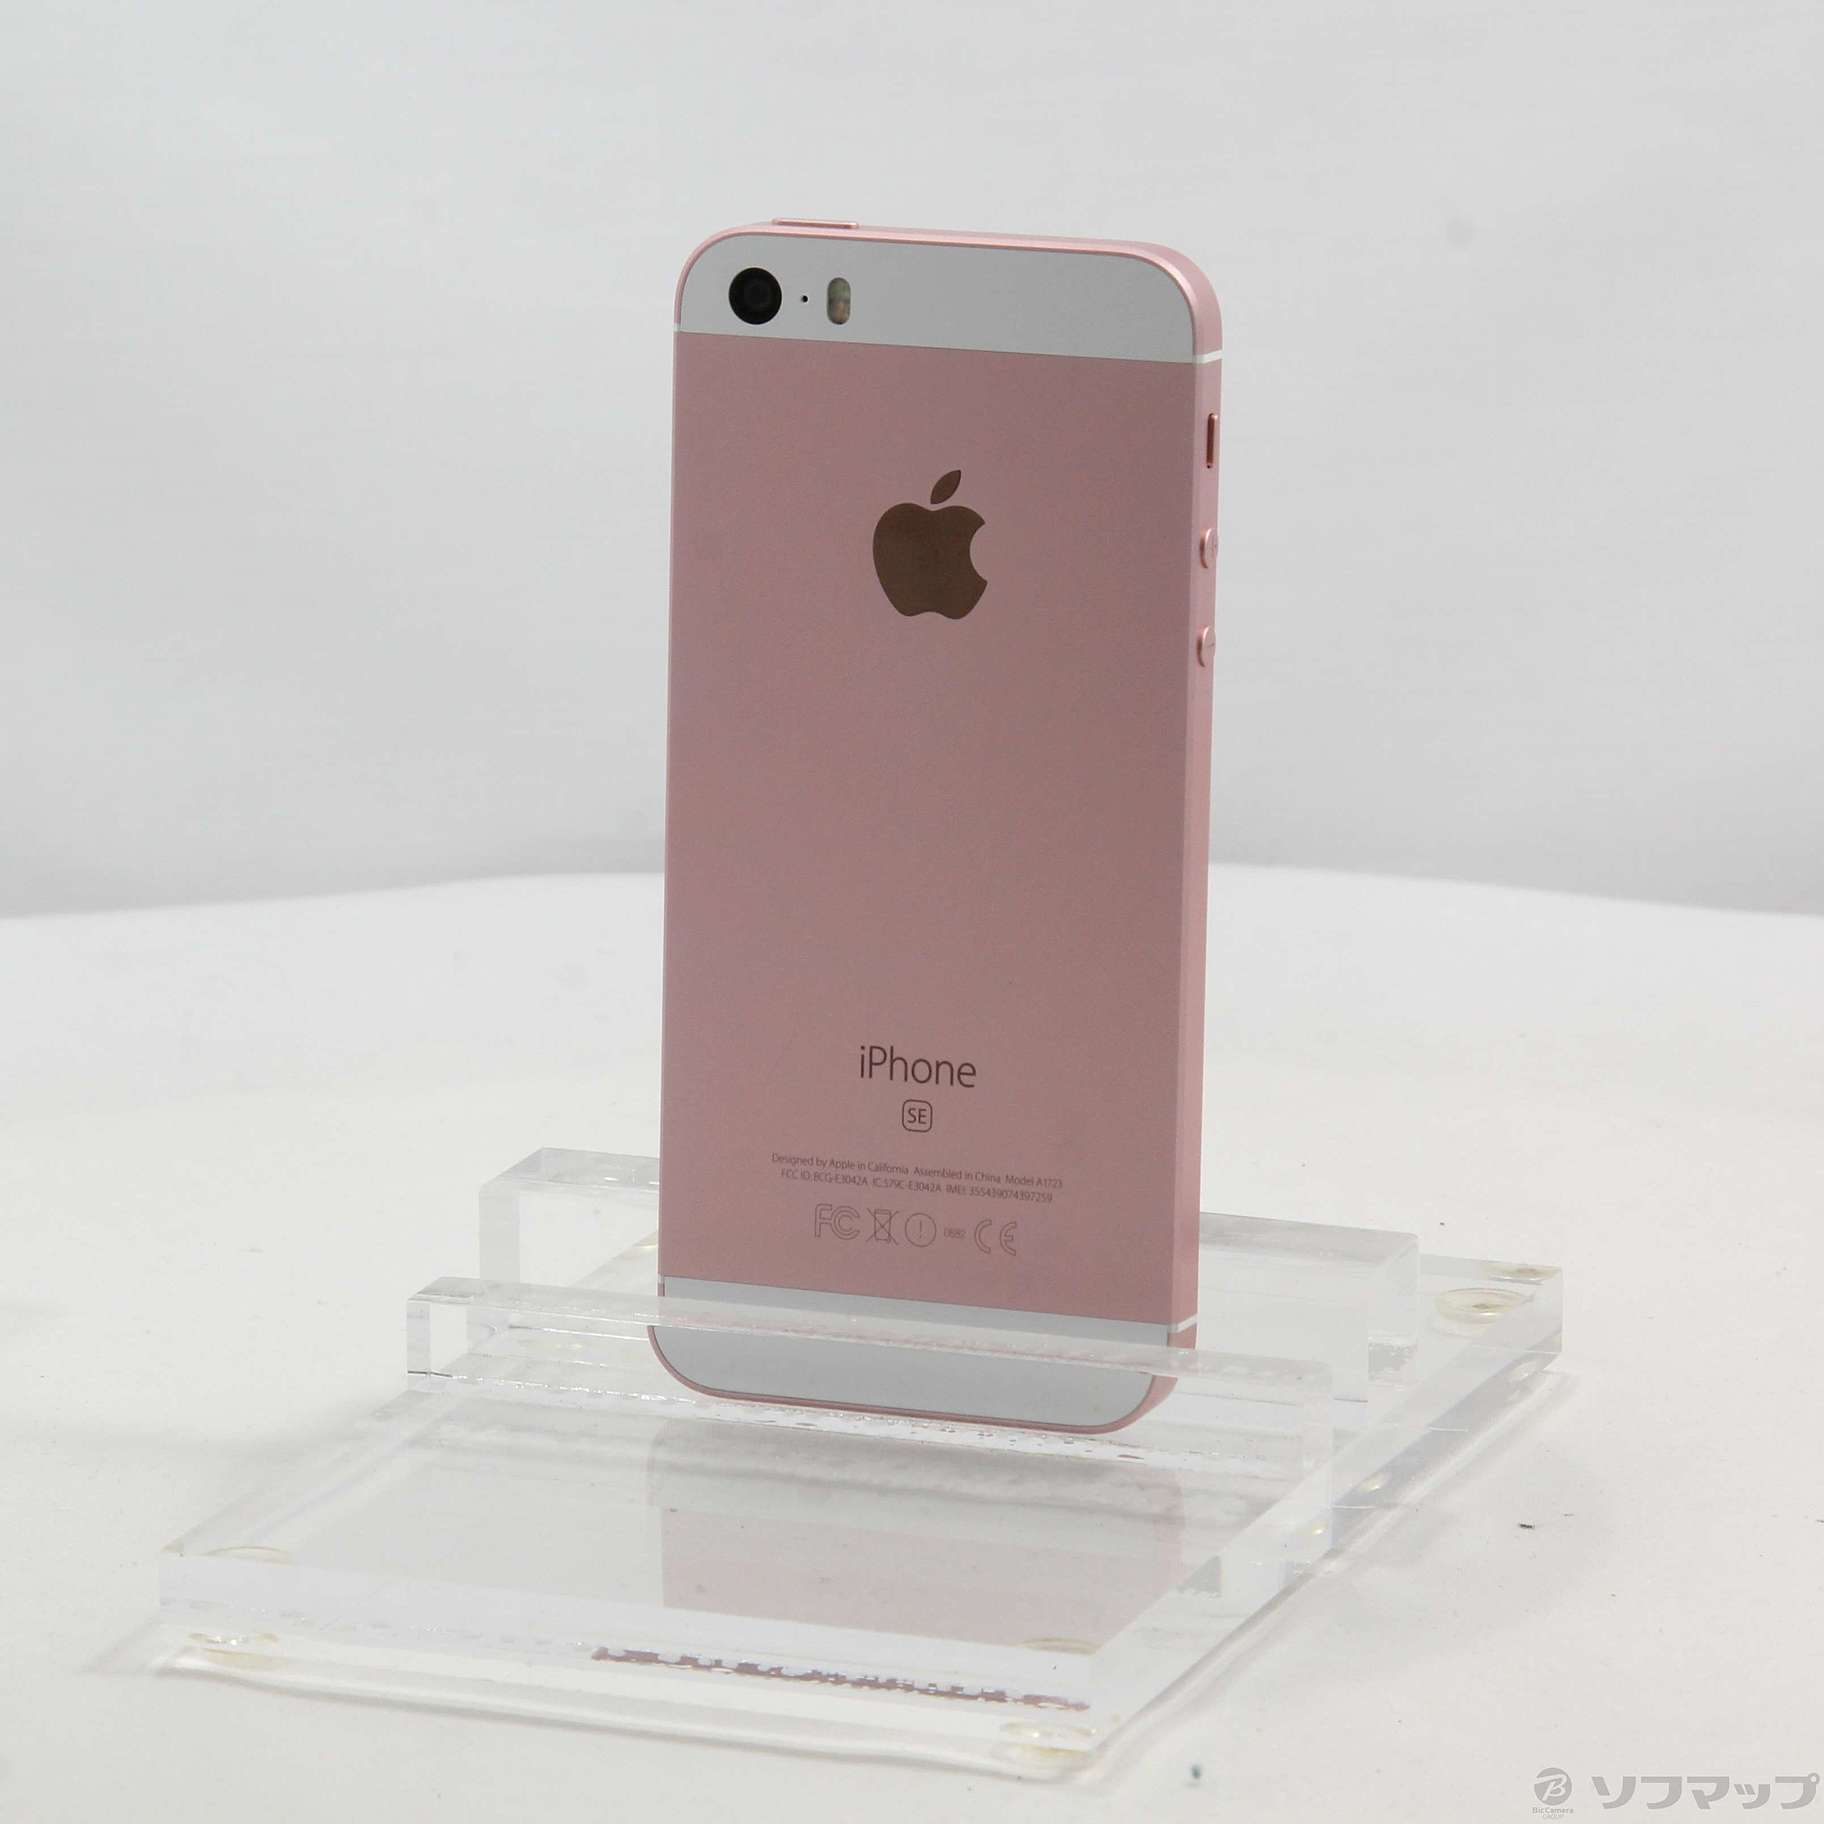 iPhone SE Rose Gold 32 GB SIMフリー